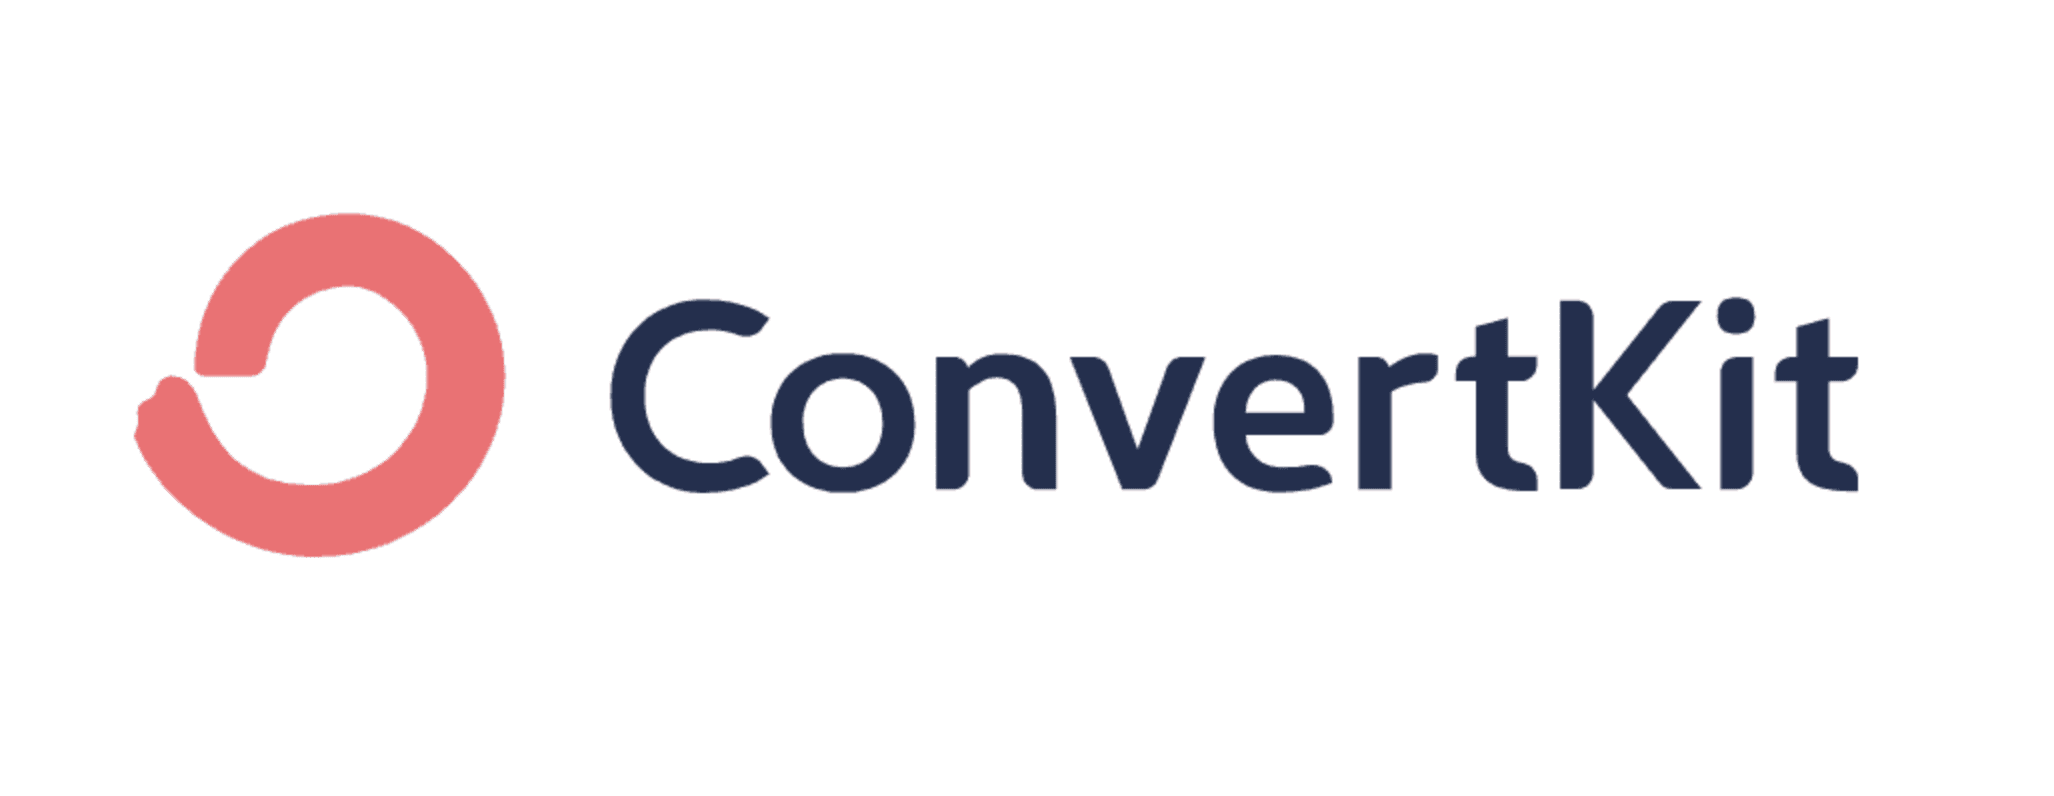 Convert_kit_logo_23.png